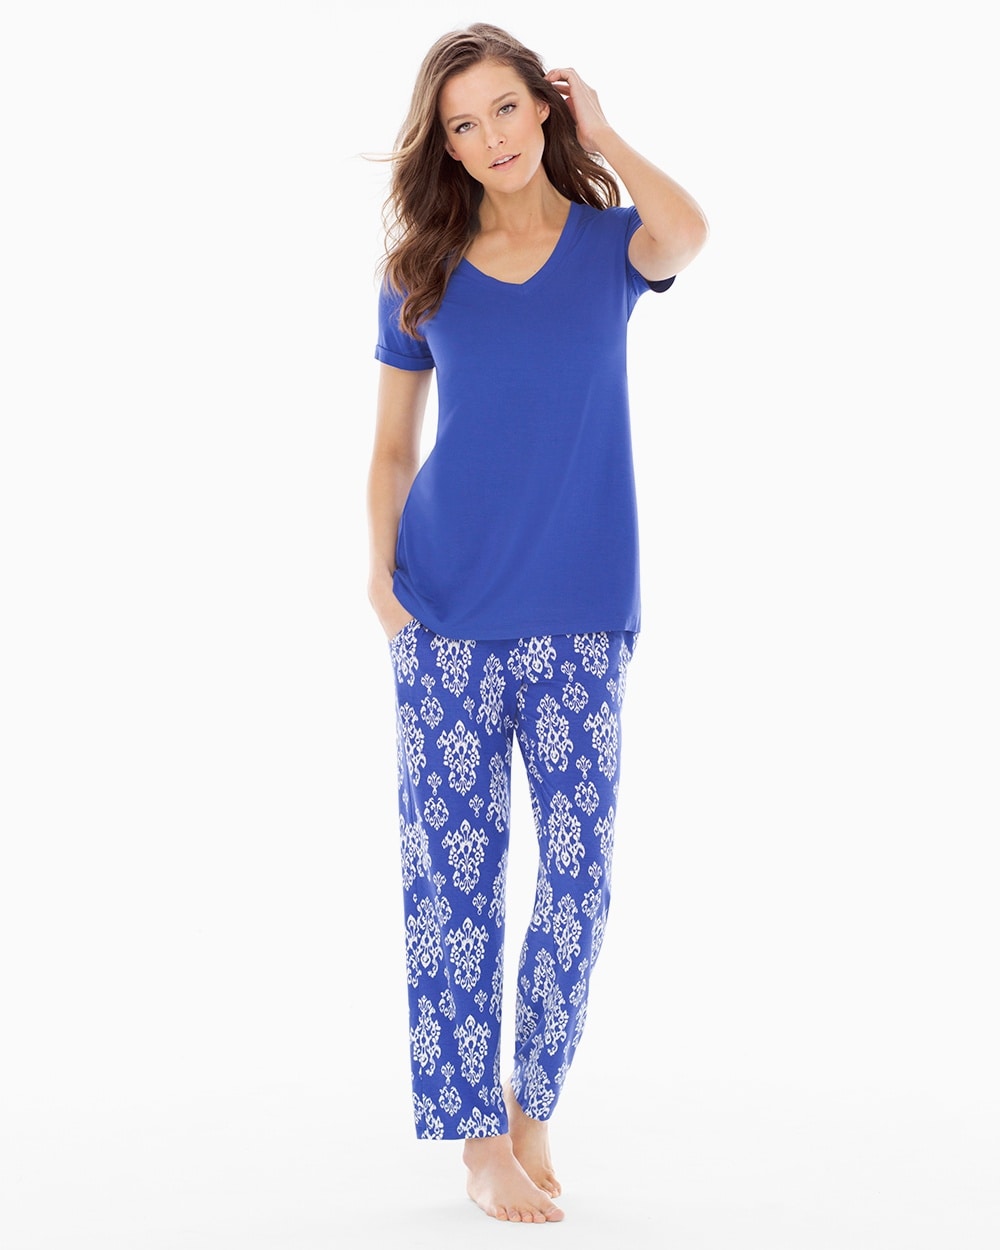 Cool Nights Ankle Pants Pajama Set Bold Ikat Jewel Blue